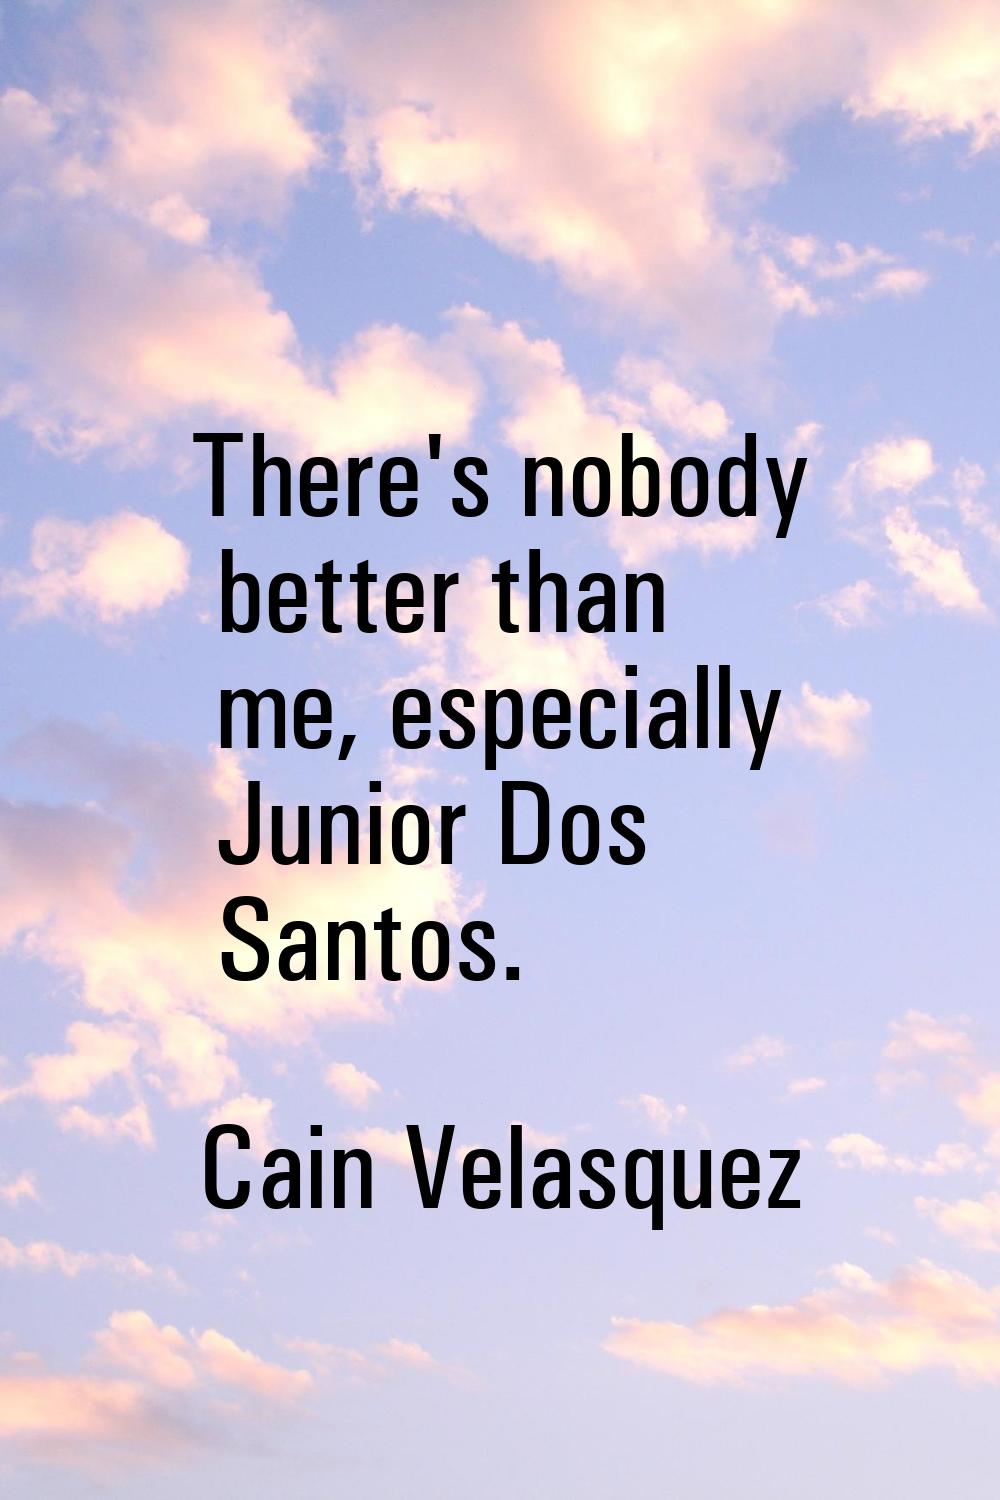 There's nobody better than me, especially Junior Dos Santos.